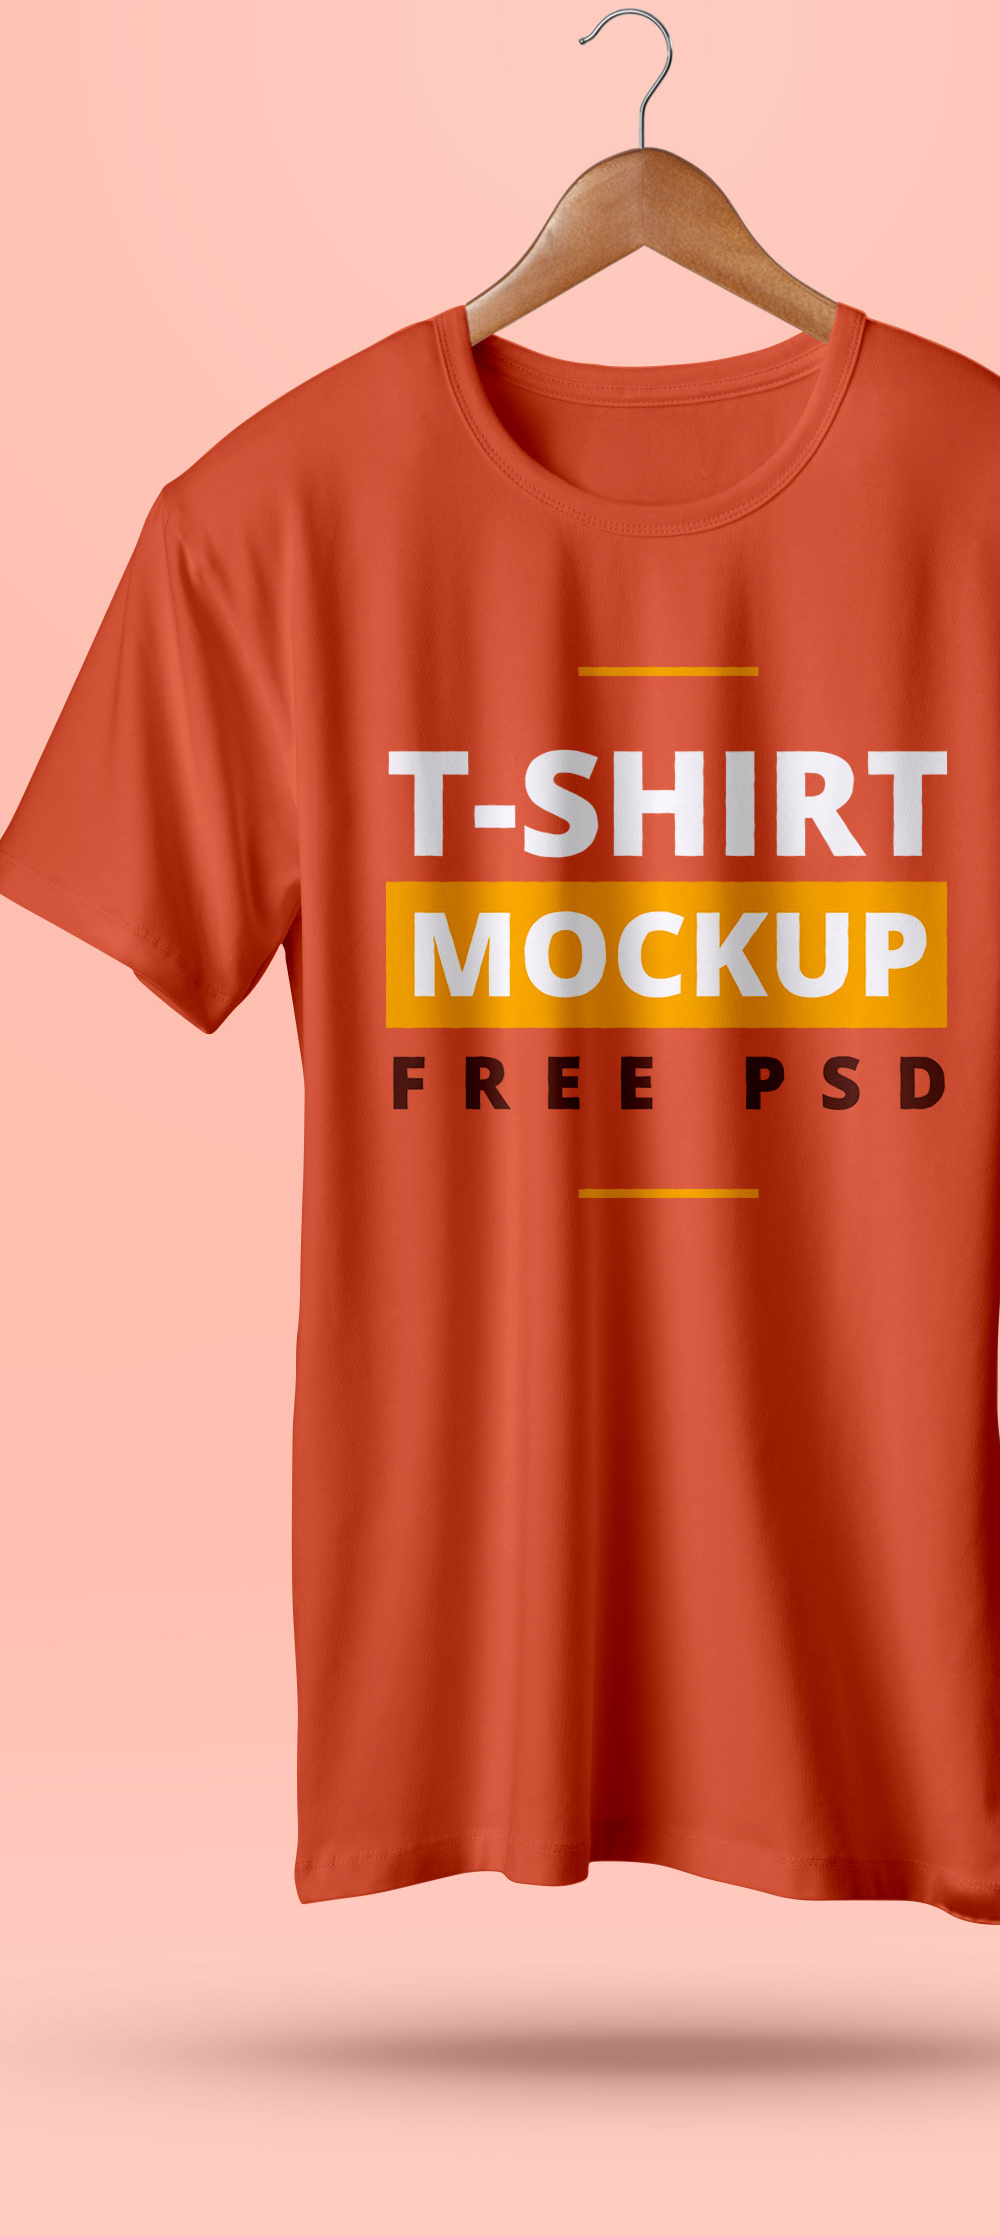 Free PSD T Shirt Mockup Free Mockup ZoneFree Mockup Zone